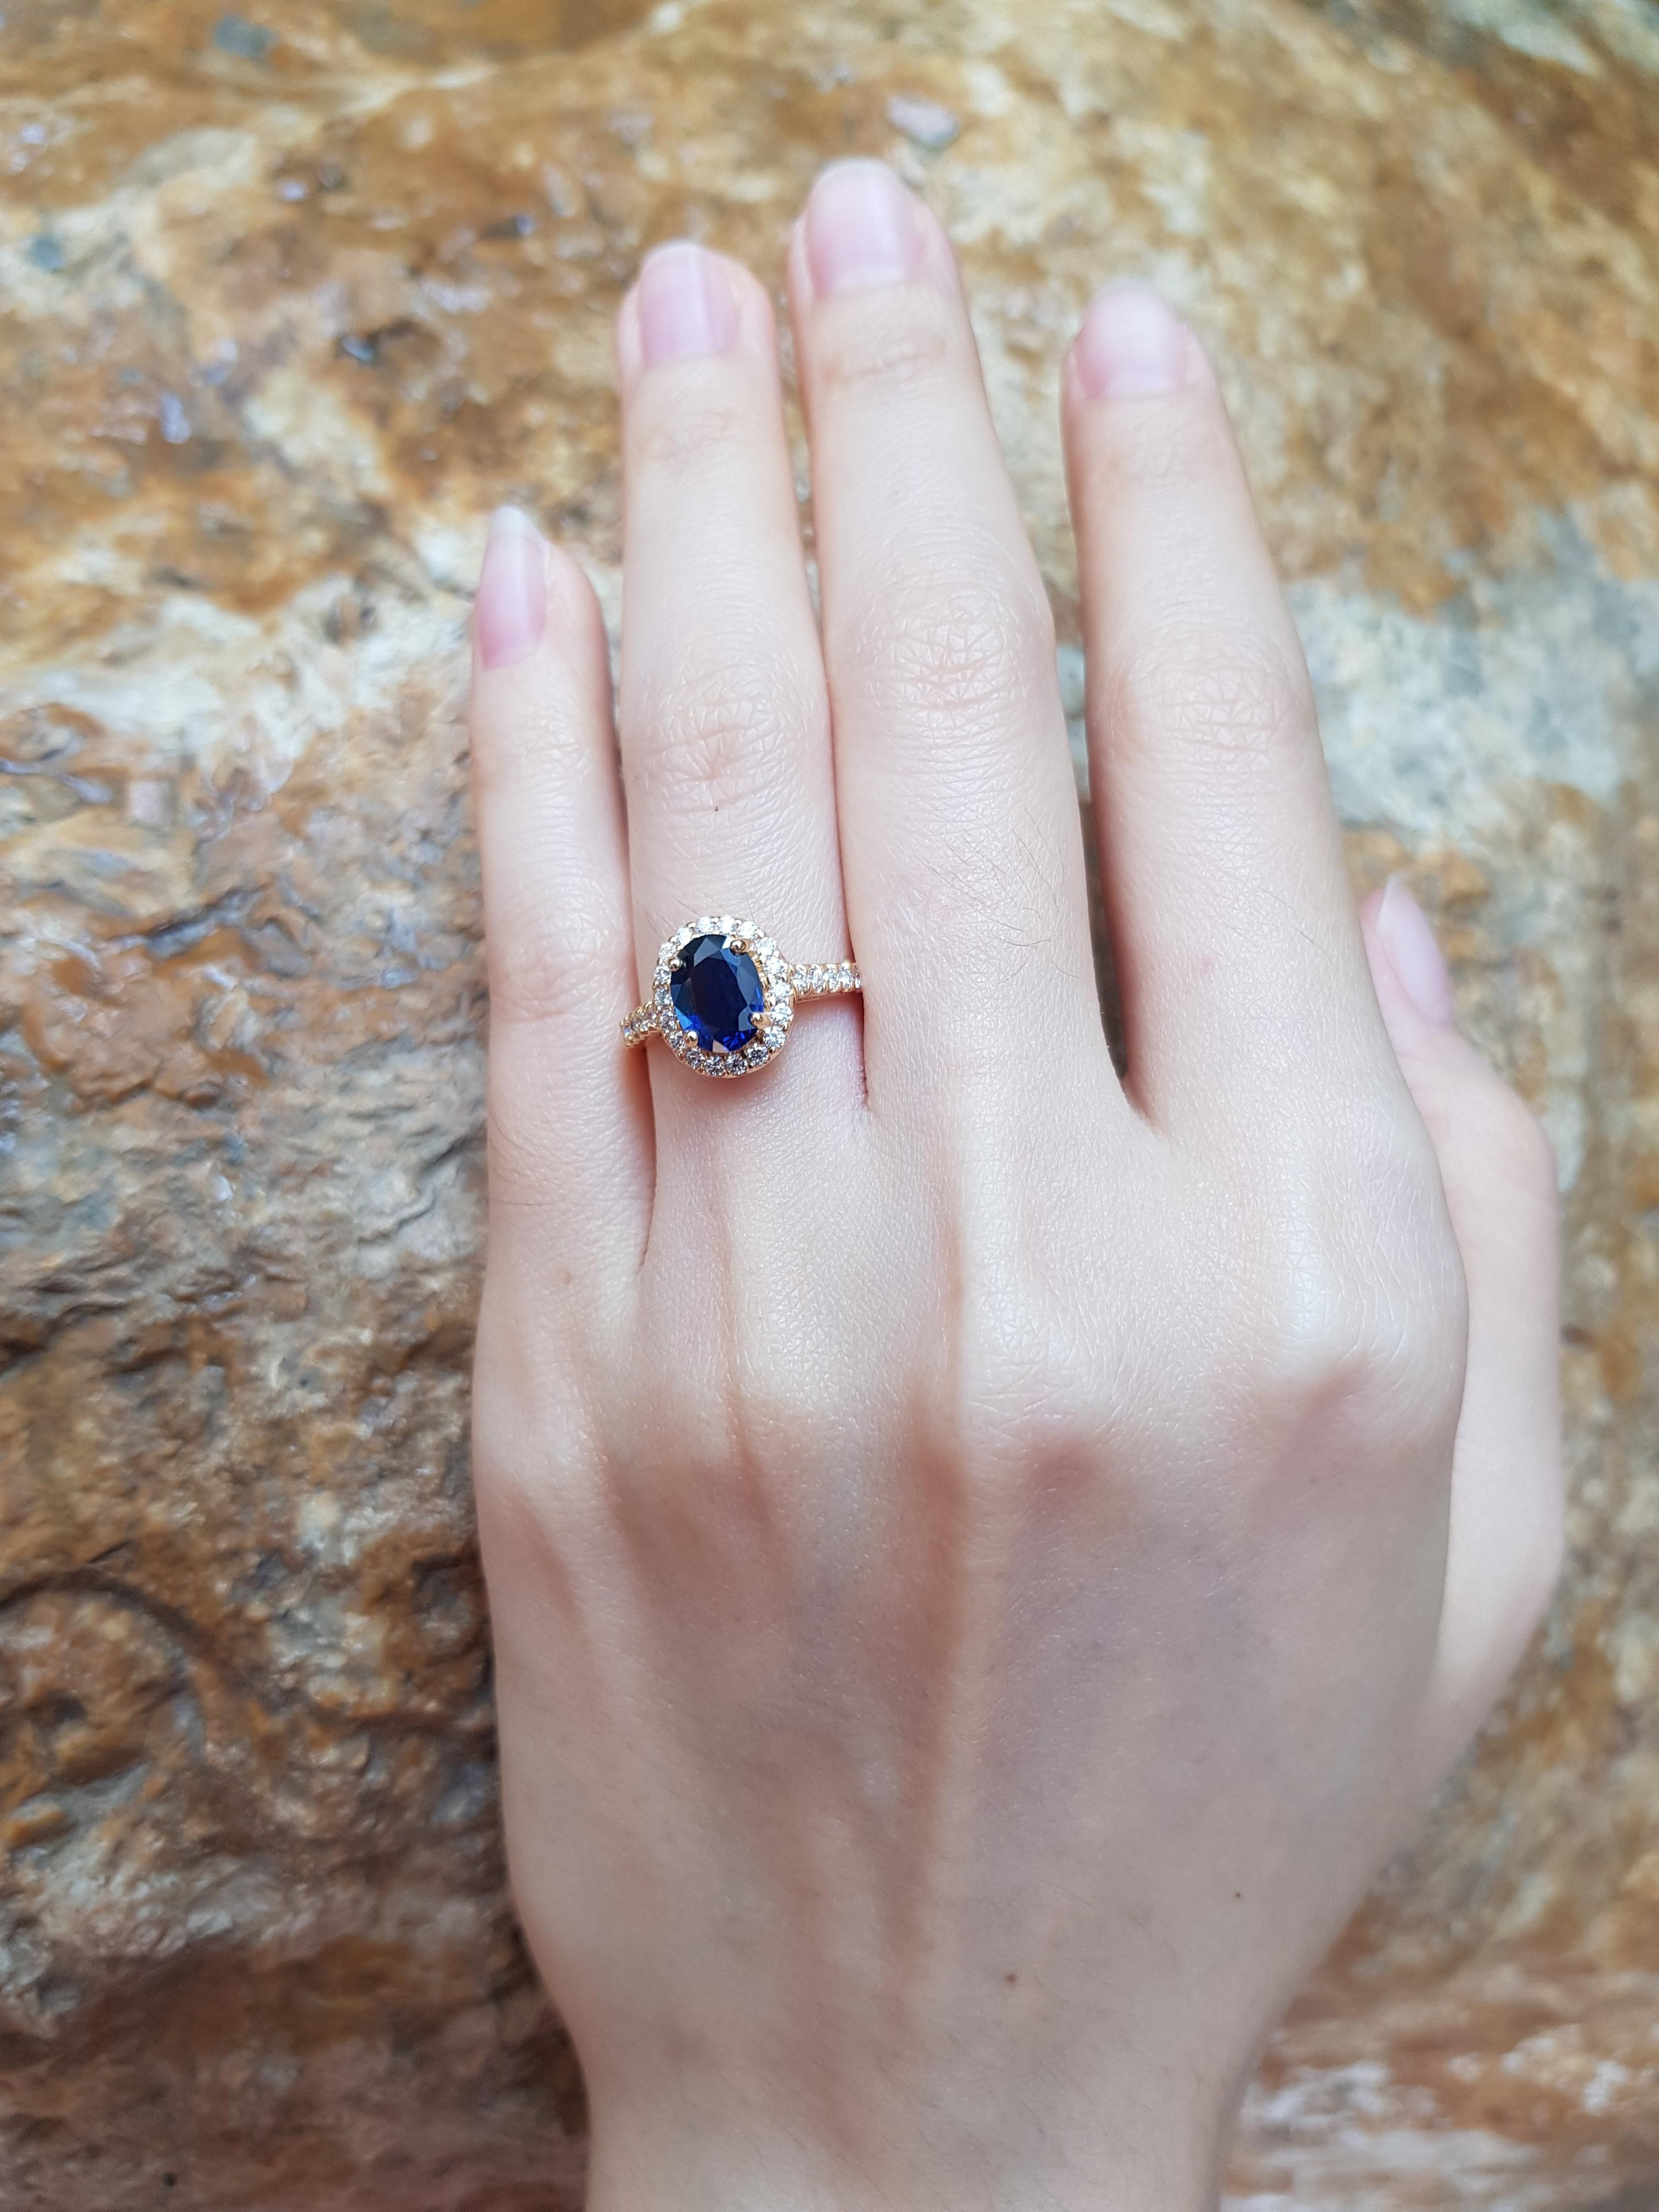 Blue Sapphire 1.09 carats with Diamond 0.33 carat Ring set in 18 Karat Gold Settings

Width: 0.9 cm
Length: 1.0 cm 
Ring Size: 51

